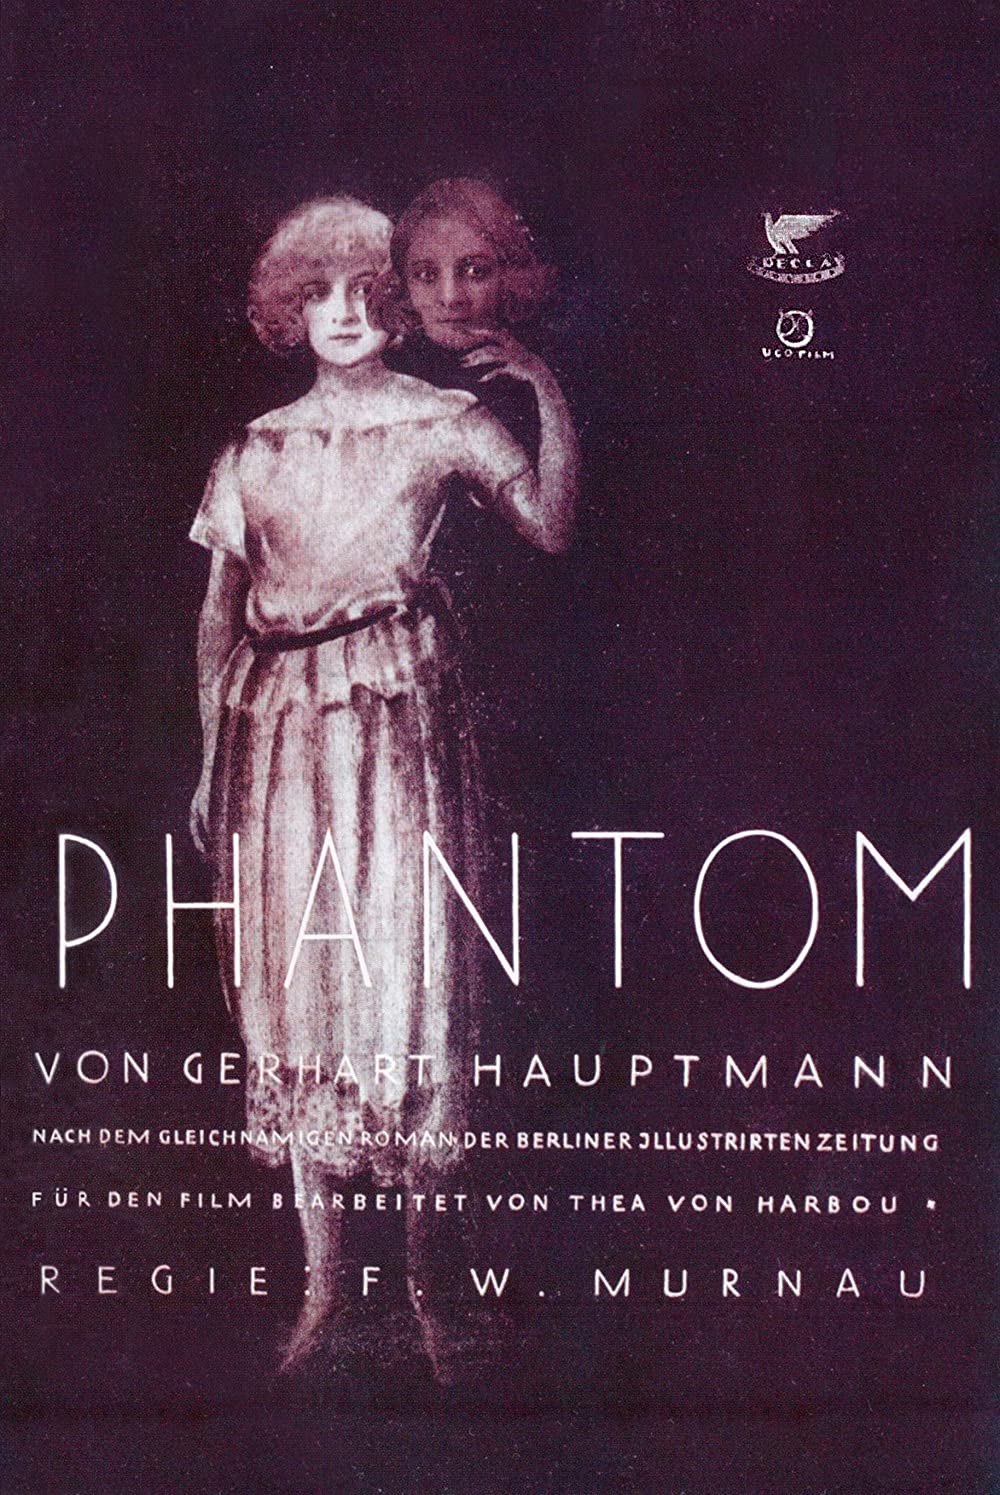 Filmbeschreibung zu Phantom (1922)